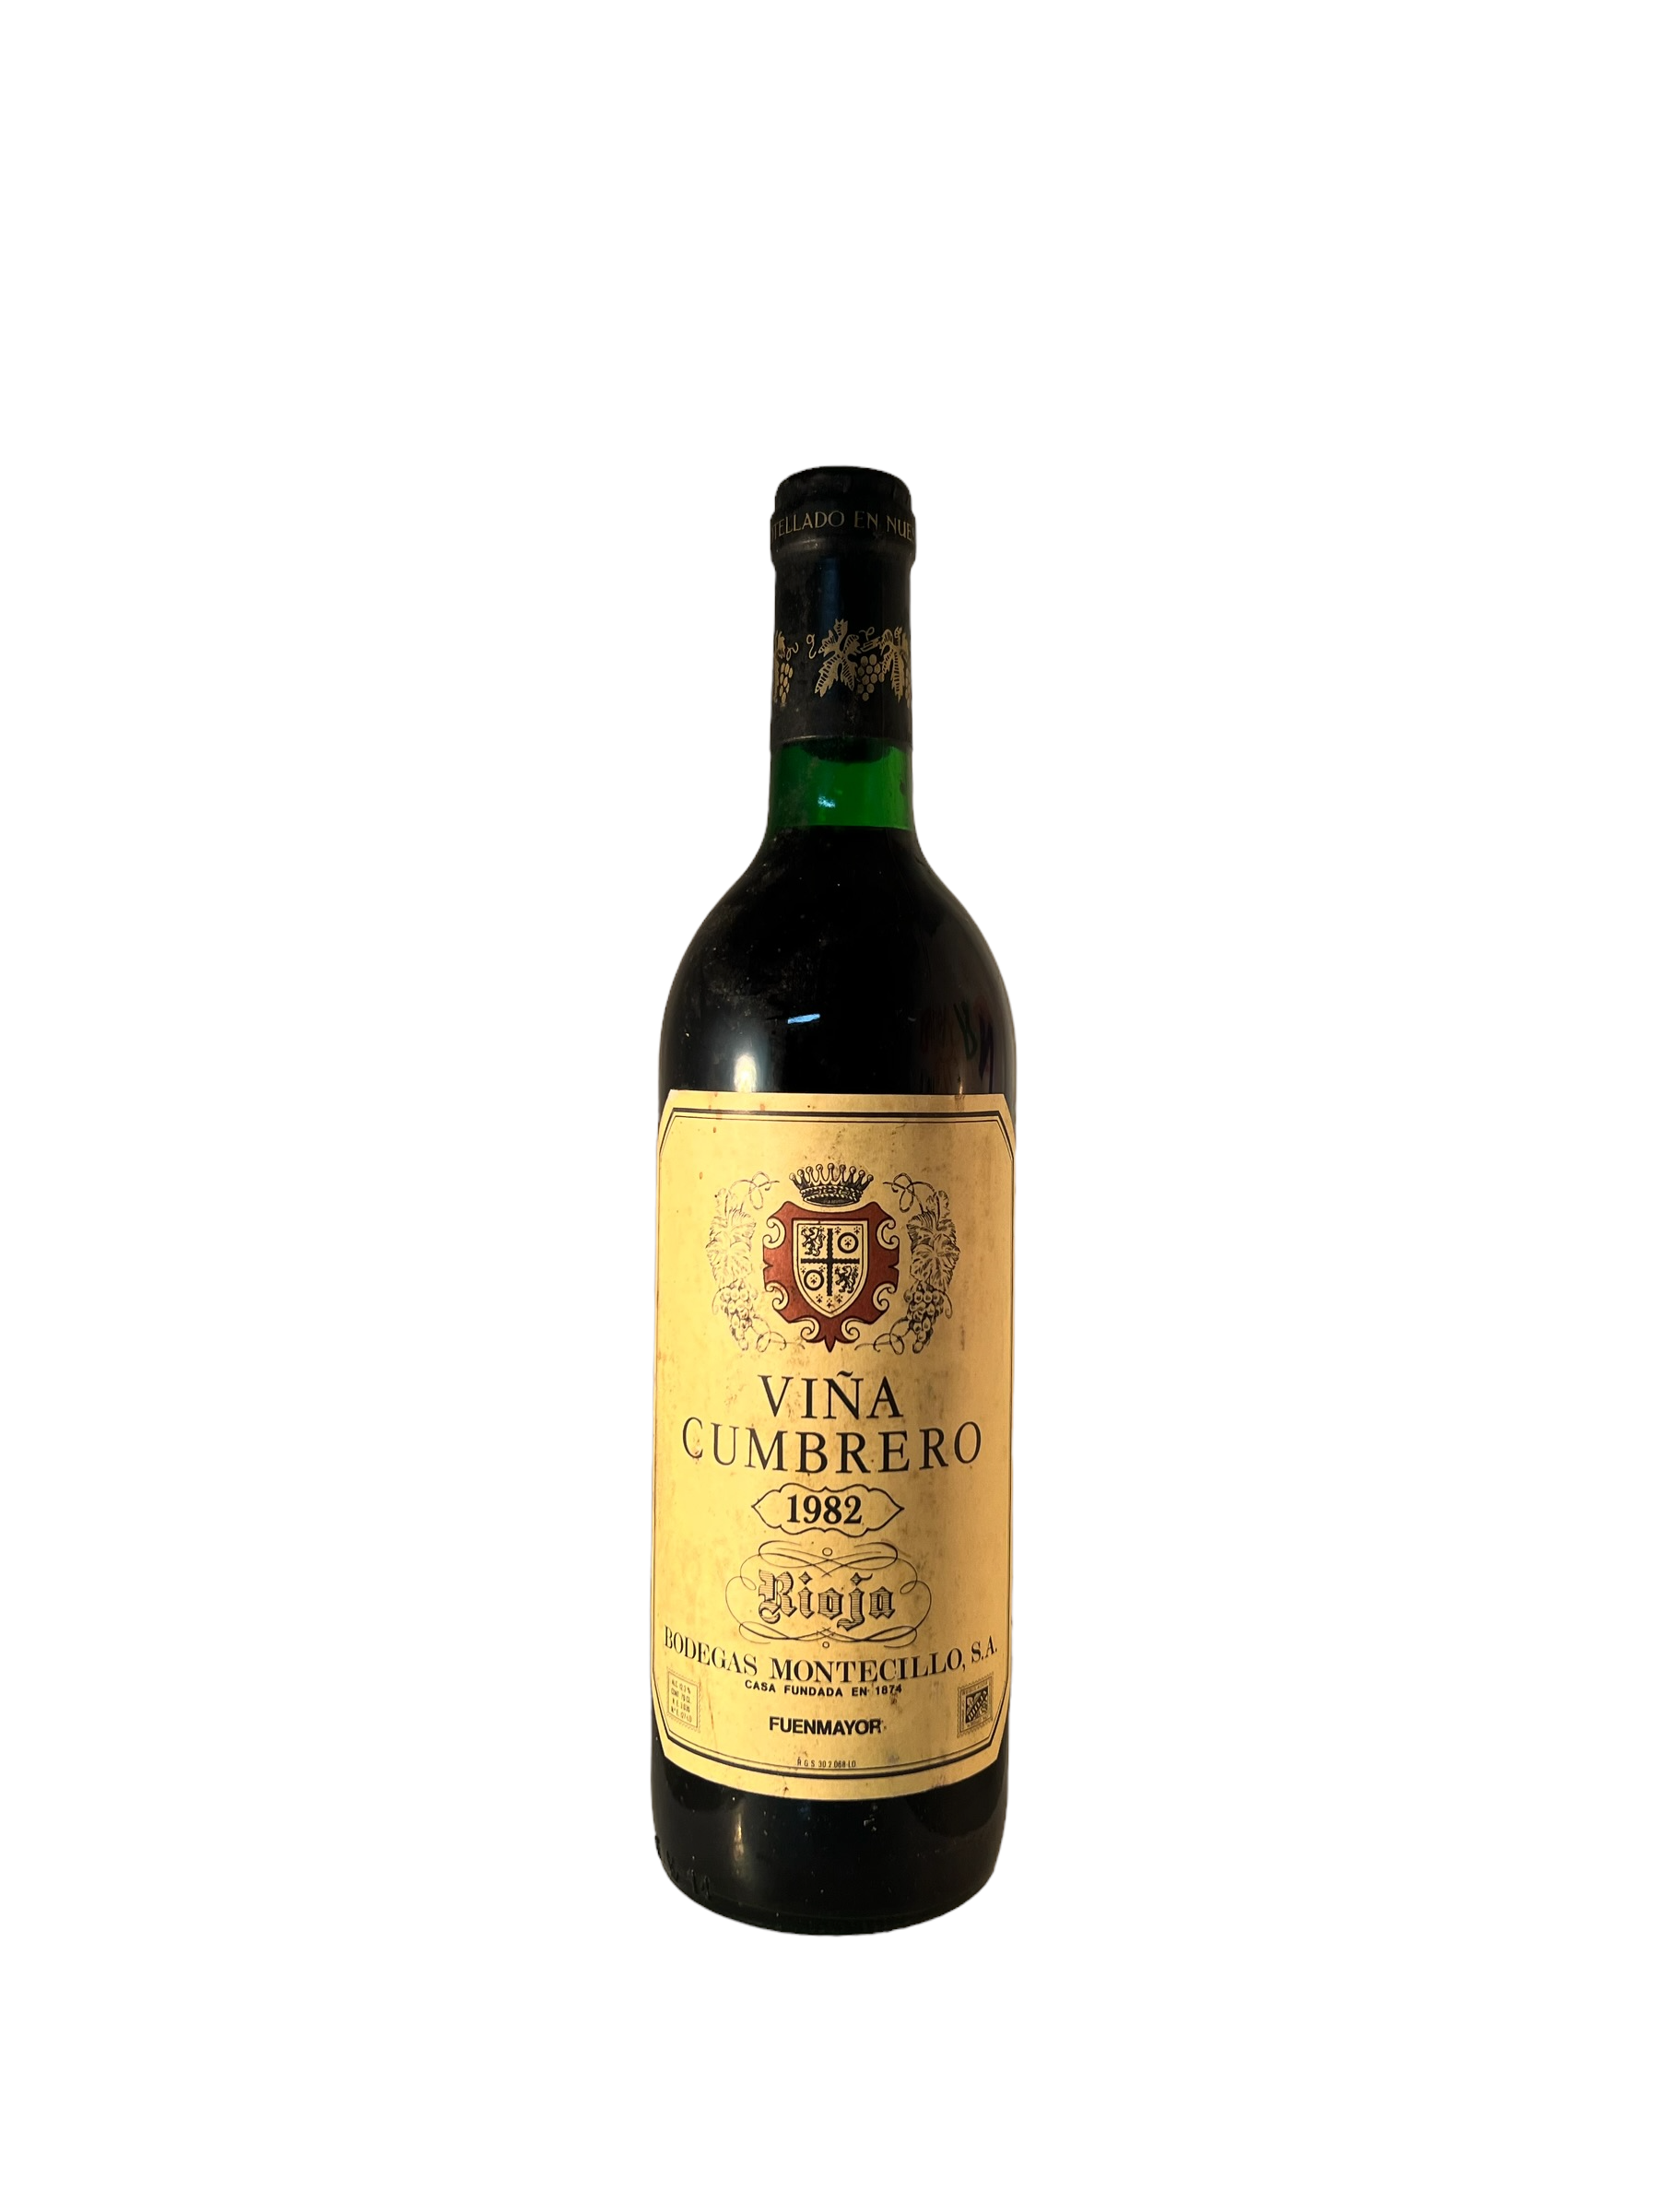 Se Rioja 1982 Vina Cumbrero hos Bottleswithhistory.dk